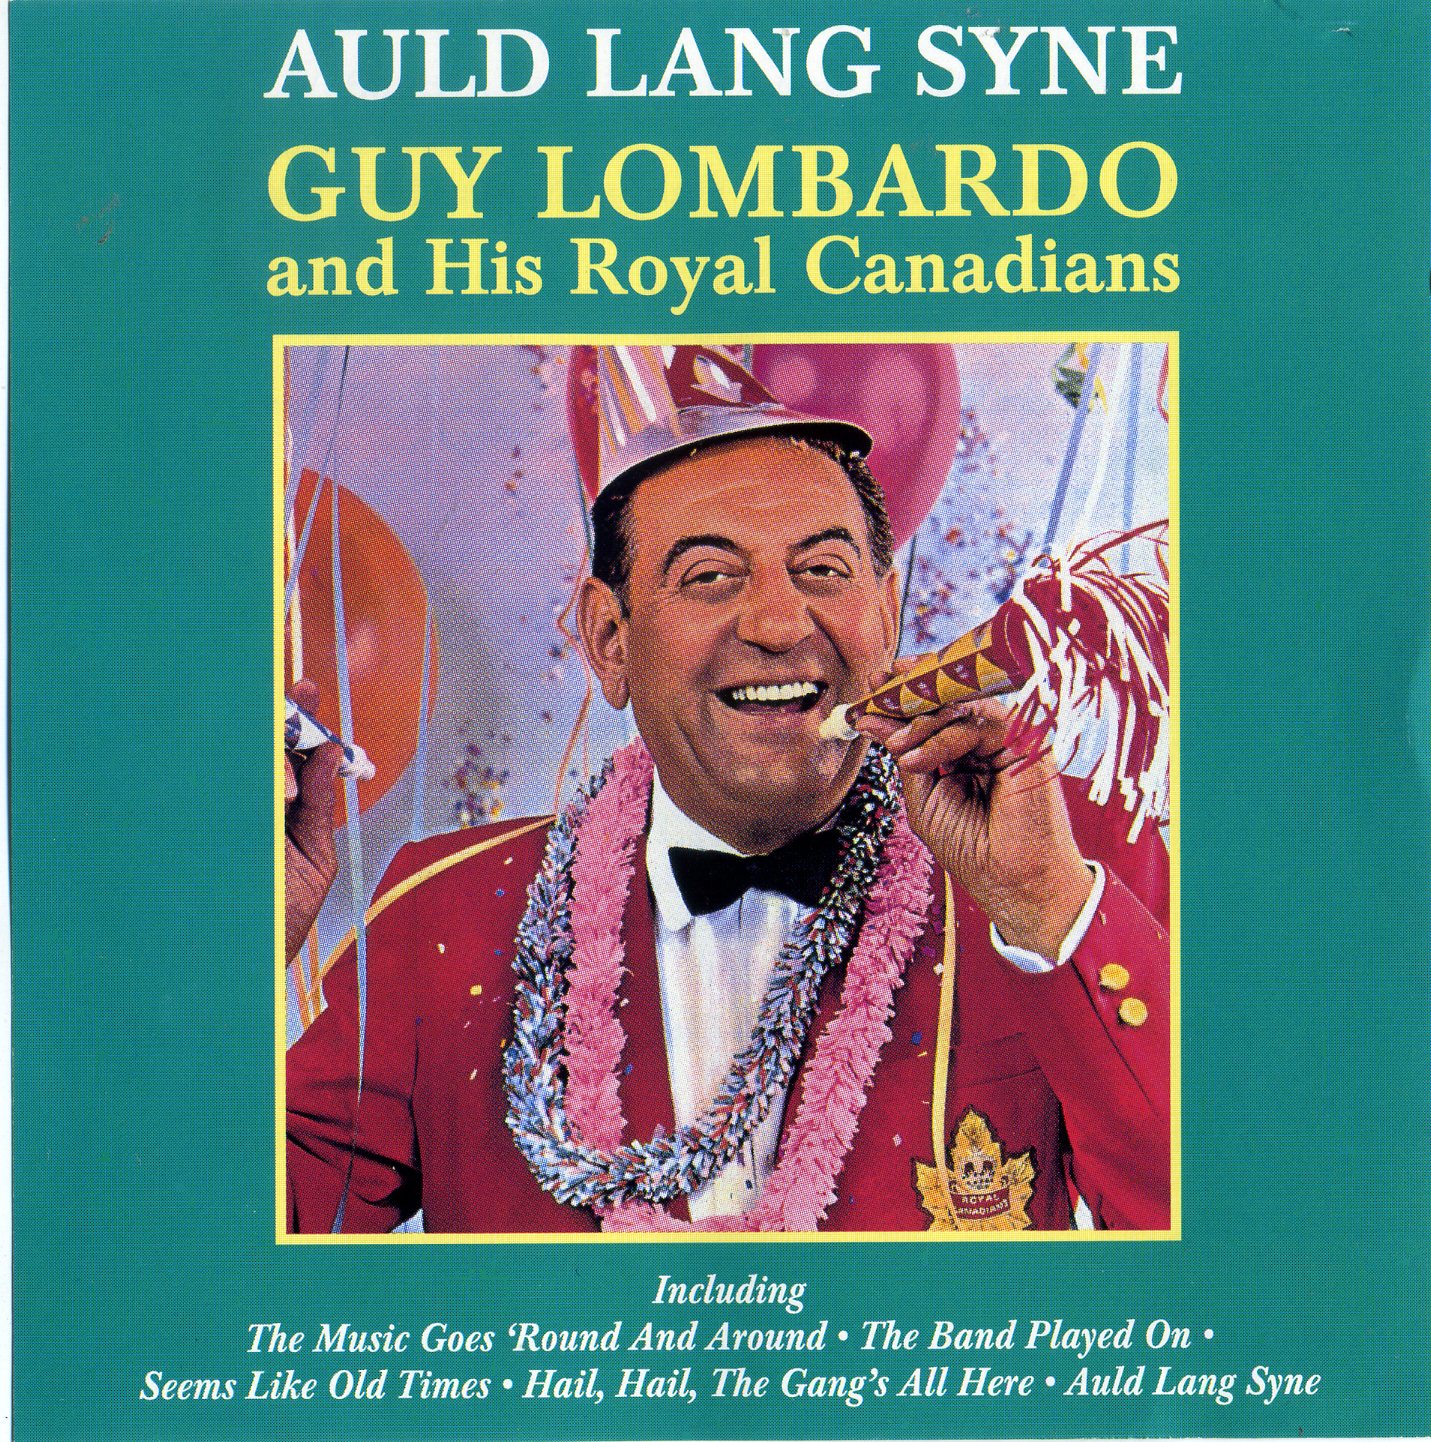 Audio Design Studio: Guy Lombardo - Auld Lang Syne Digital remastered